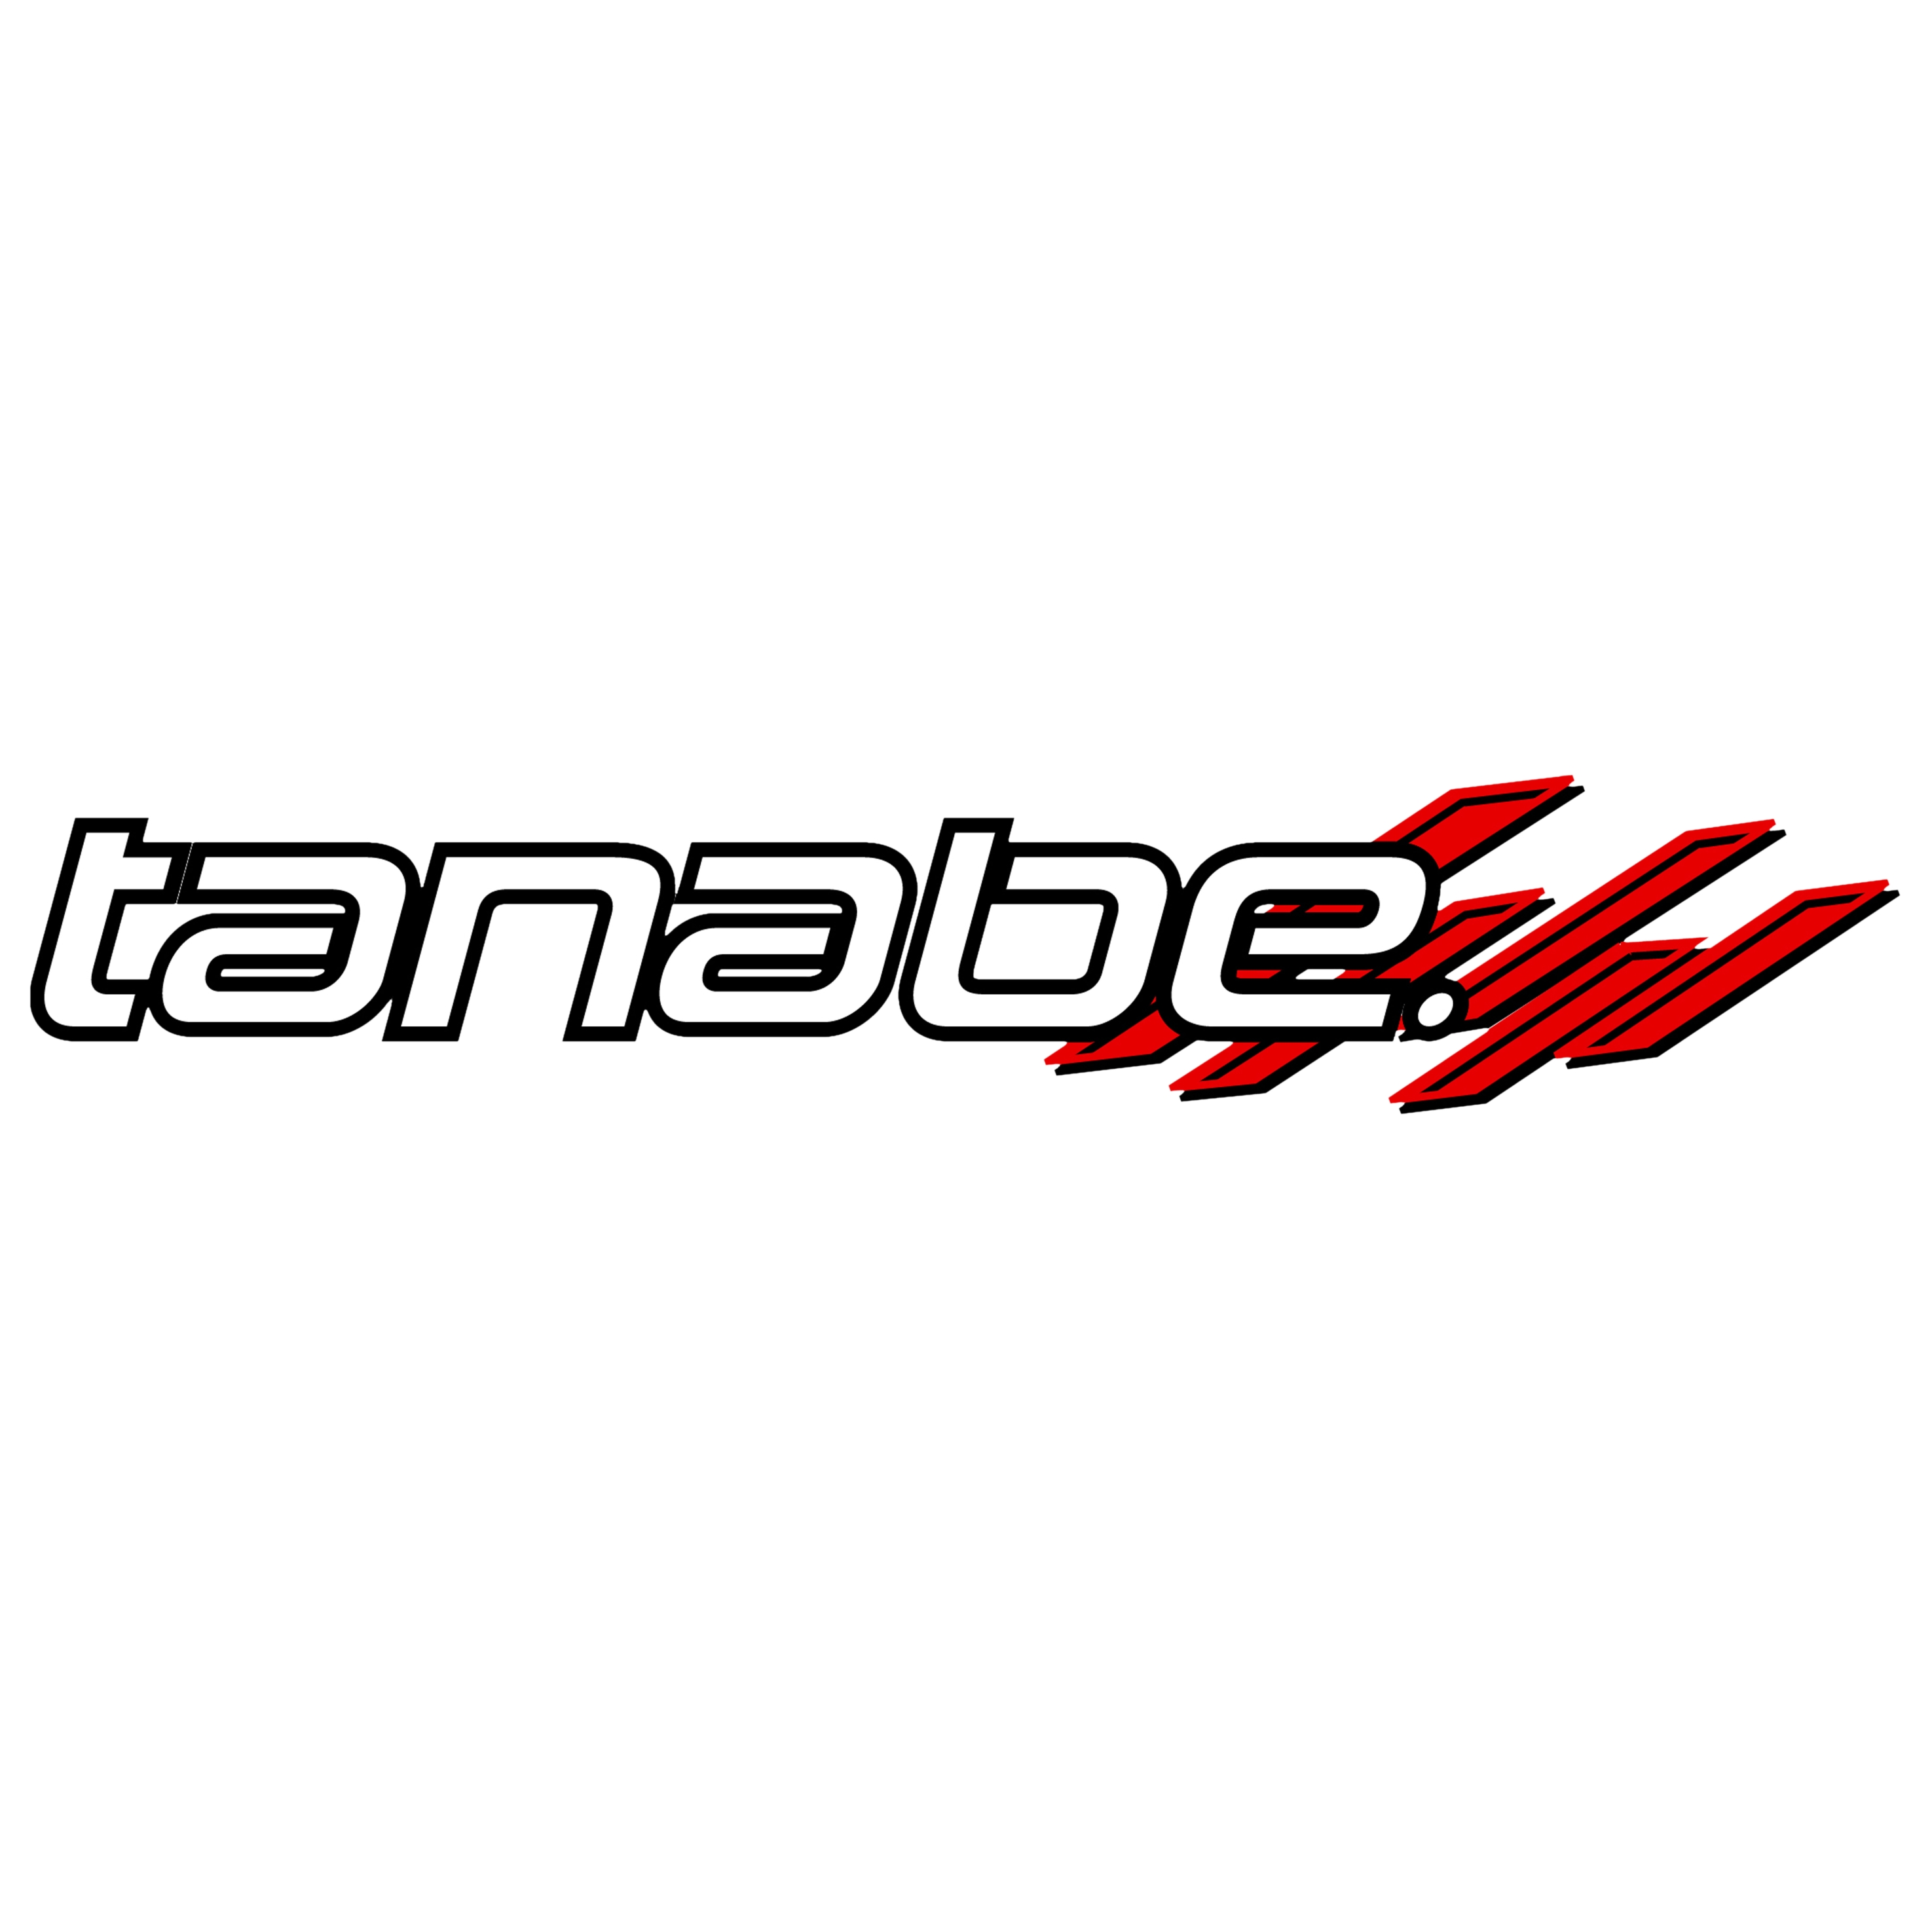 Tanabe